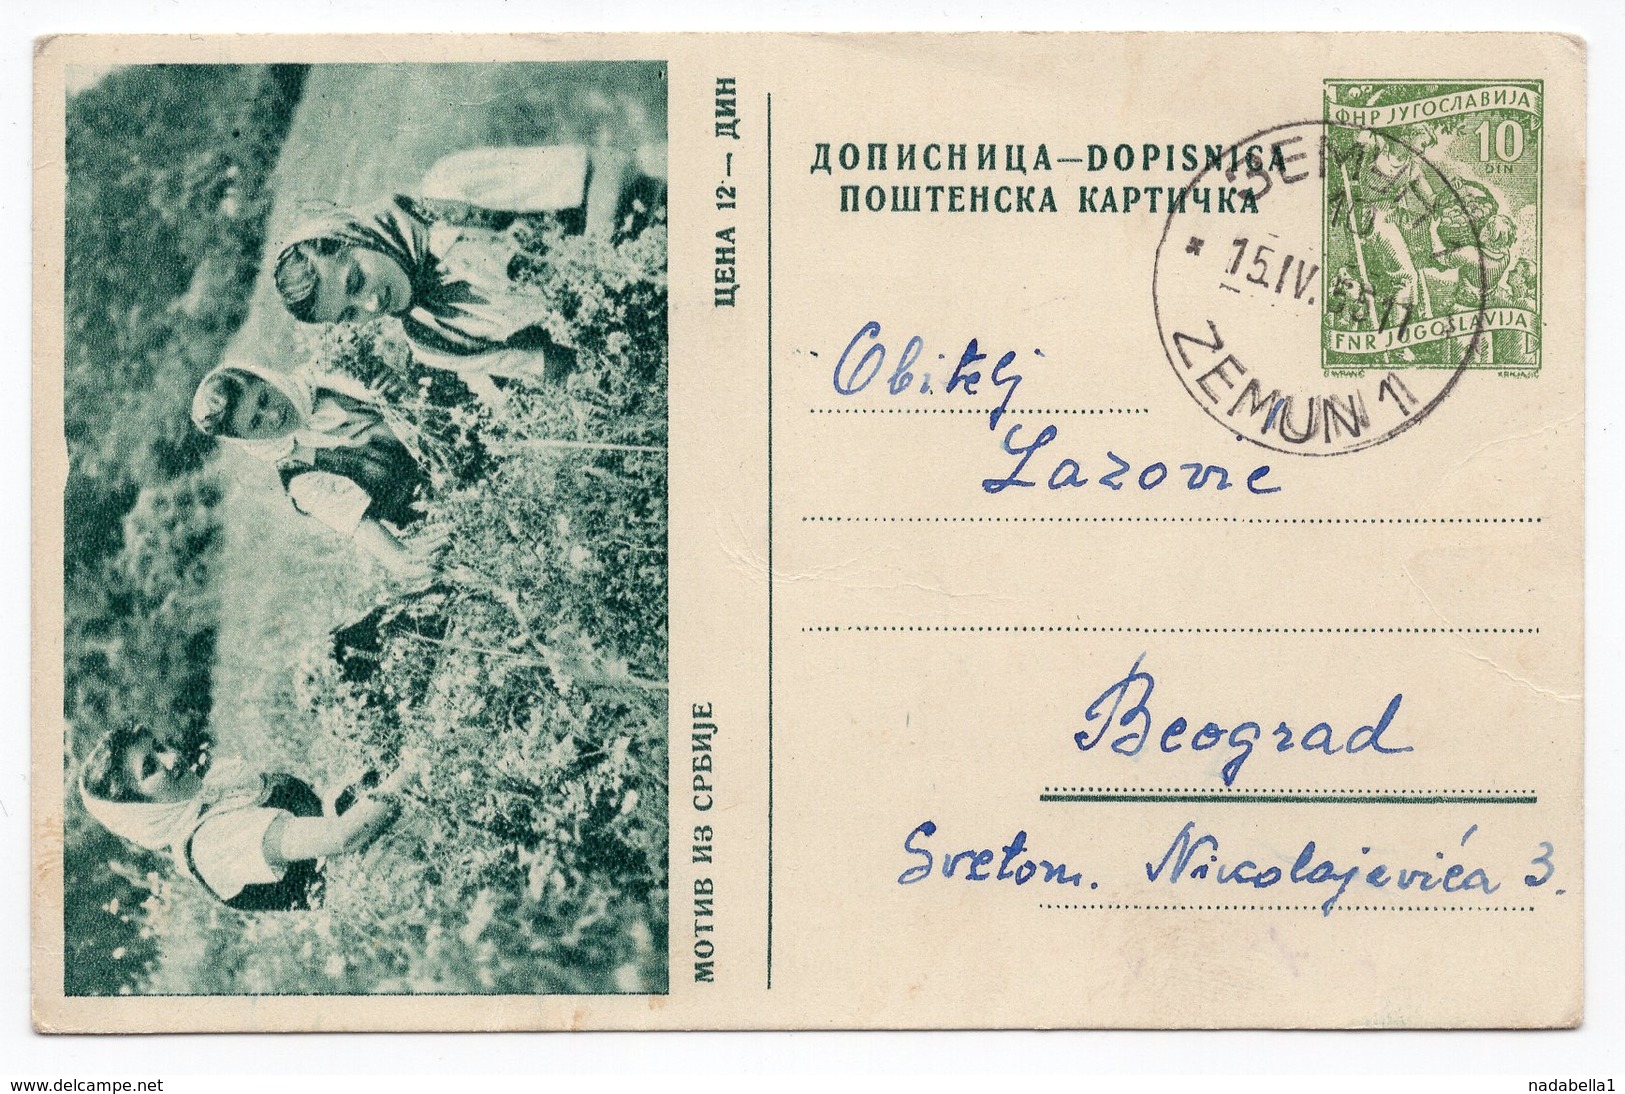 10 DINARA GREEN, 1955, MOTIV IZ SRBIJE, YUGOSLAVIA, POSTAL STATIONERY, USED - Serbia